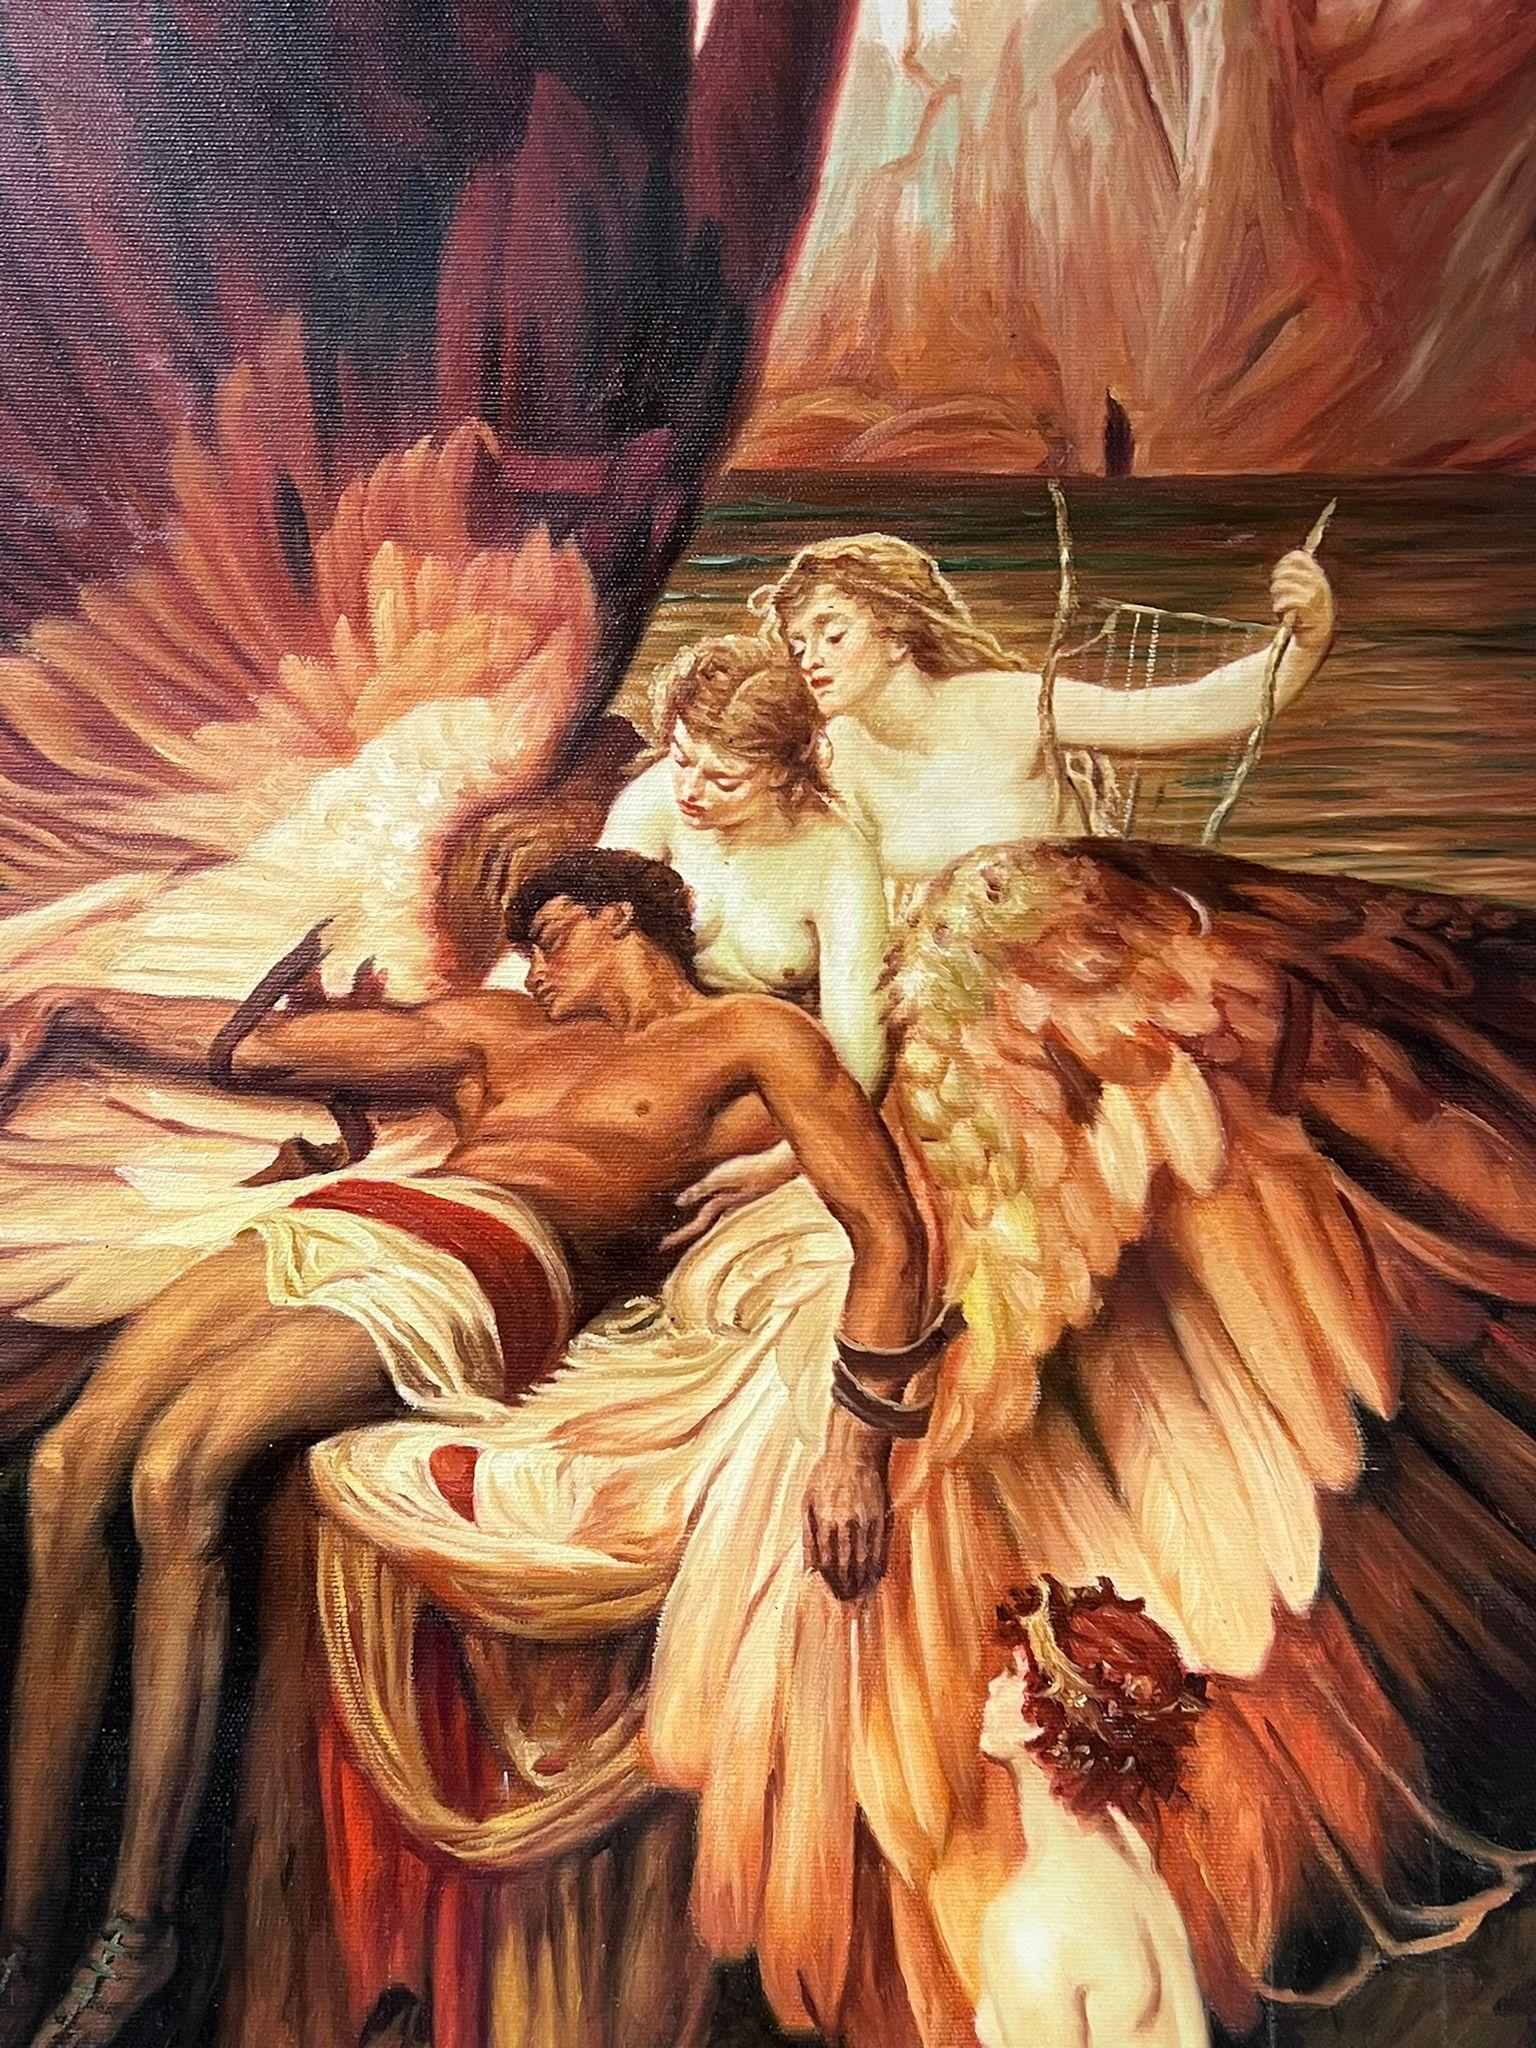 The Lament of Icarus, großes signiertes Ölgemälde auf Leinwand, mythologische Akte – Painting von after Herbert James Draper